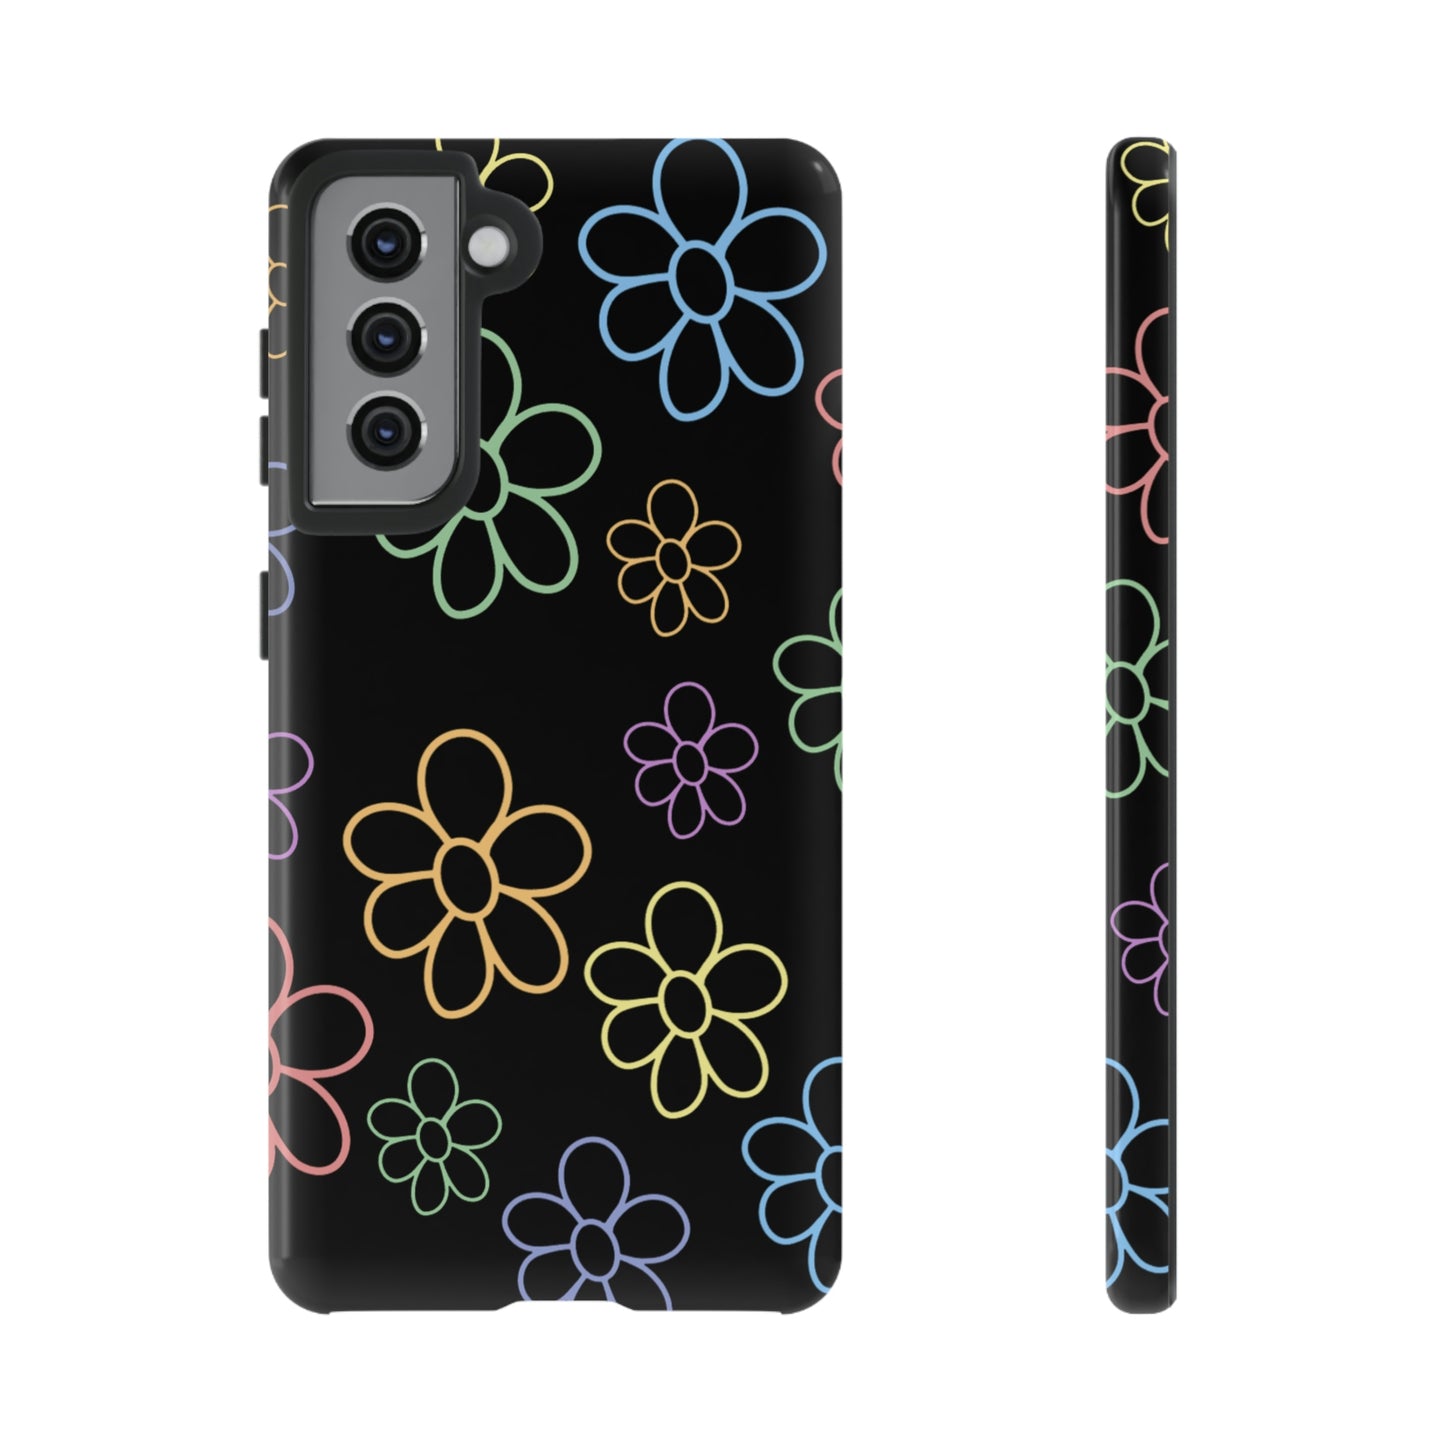 Neon Flower Tough Phone Cases